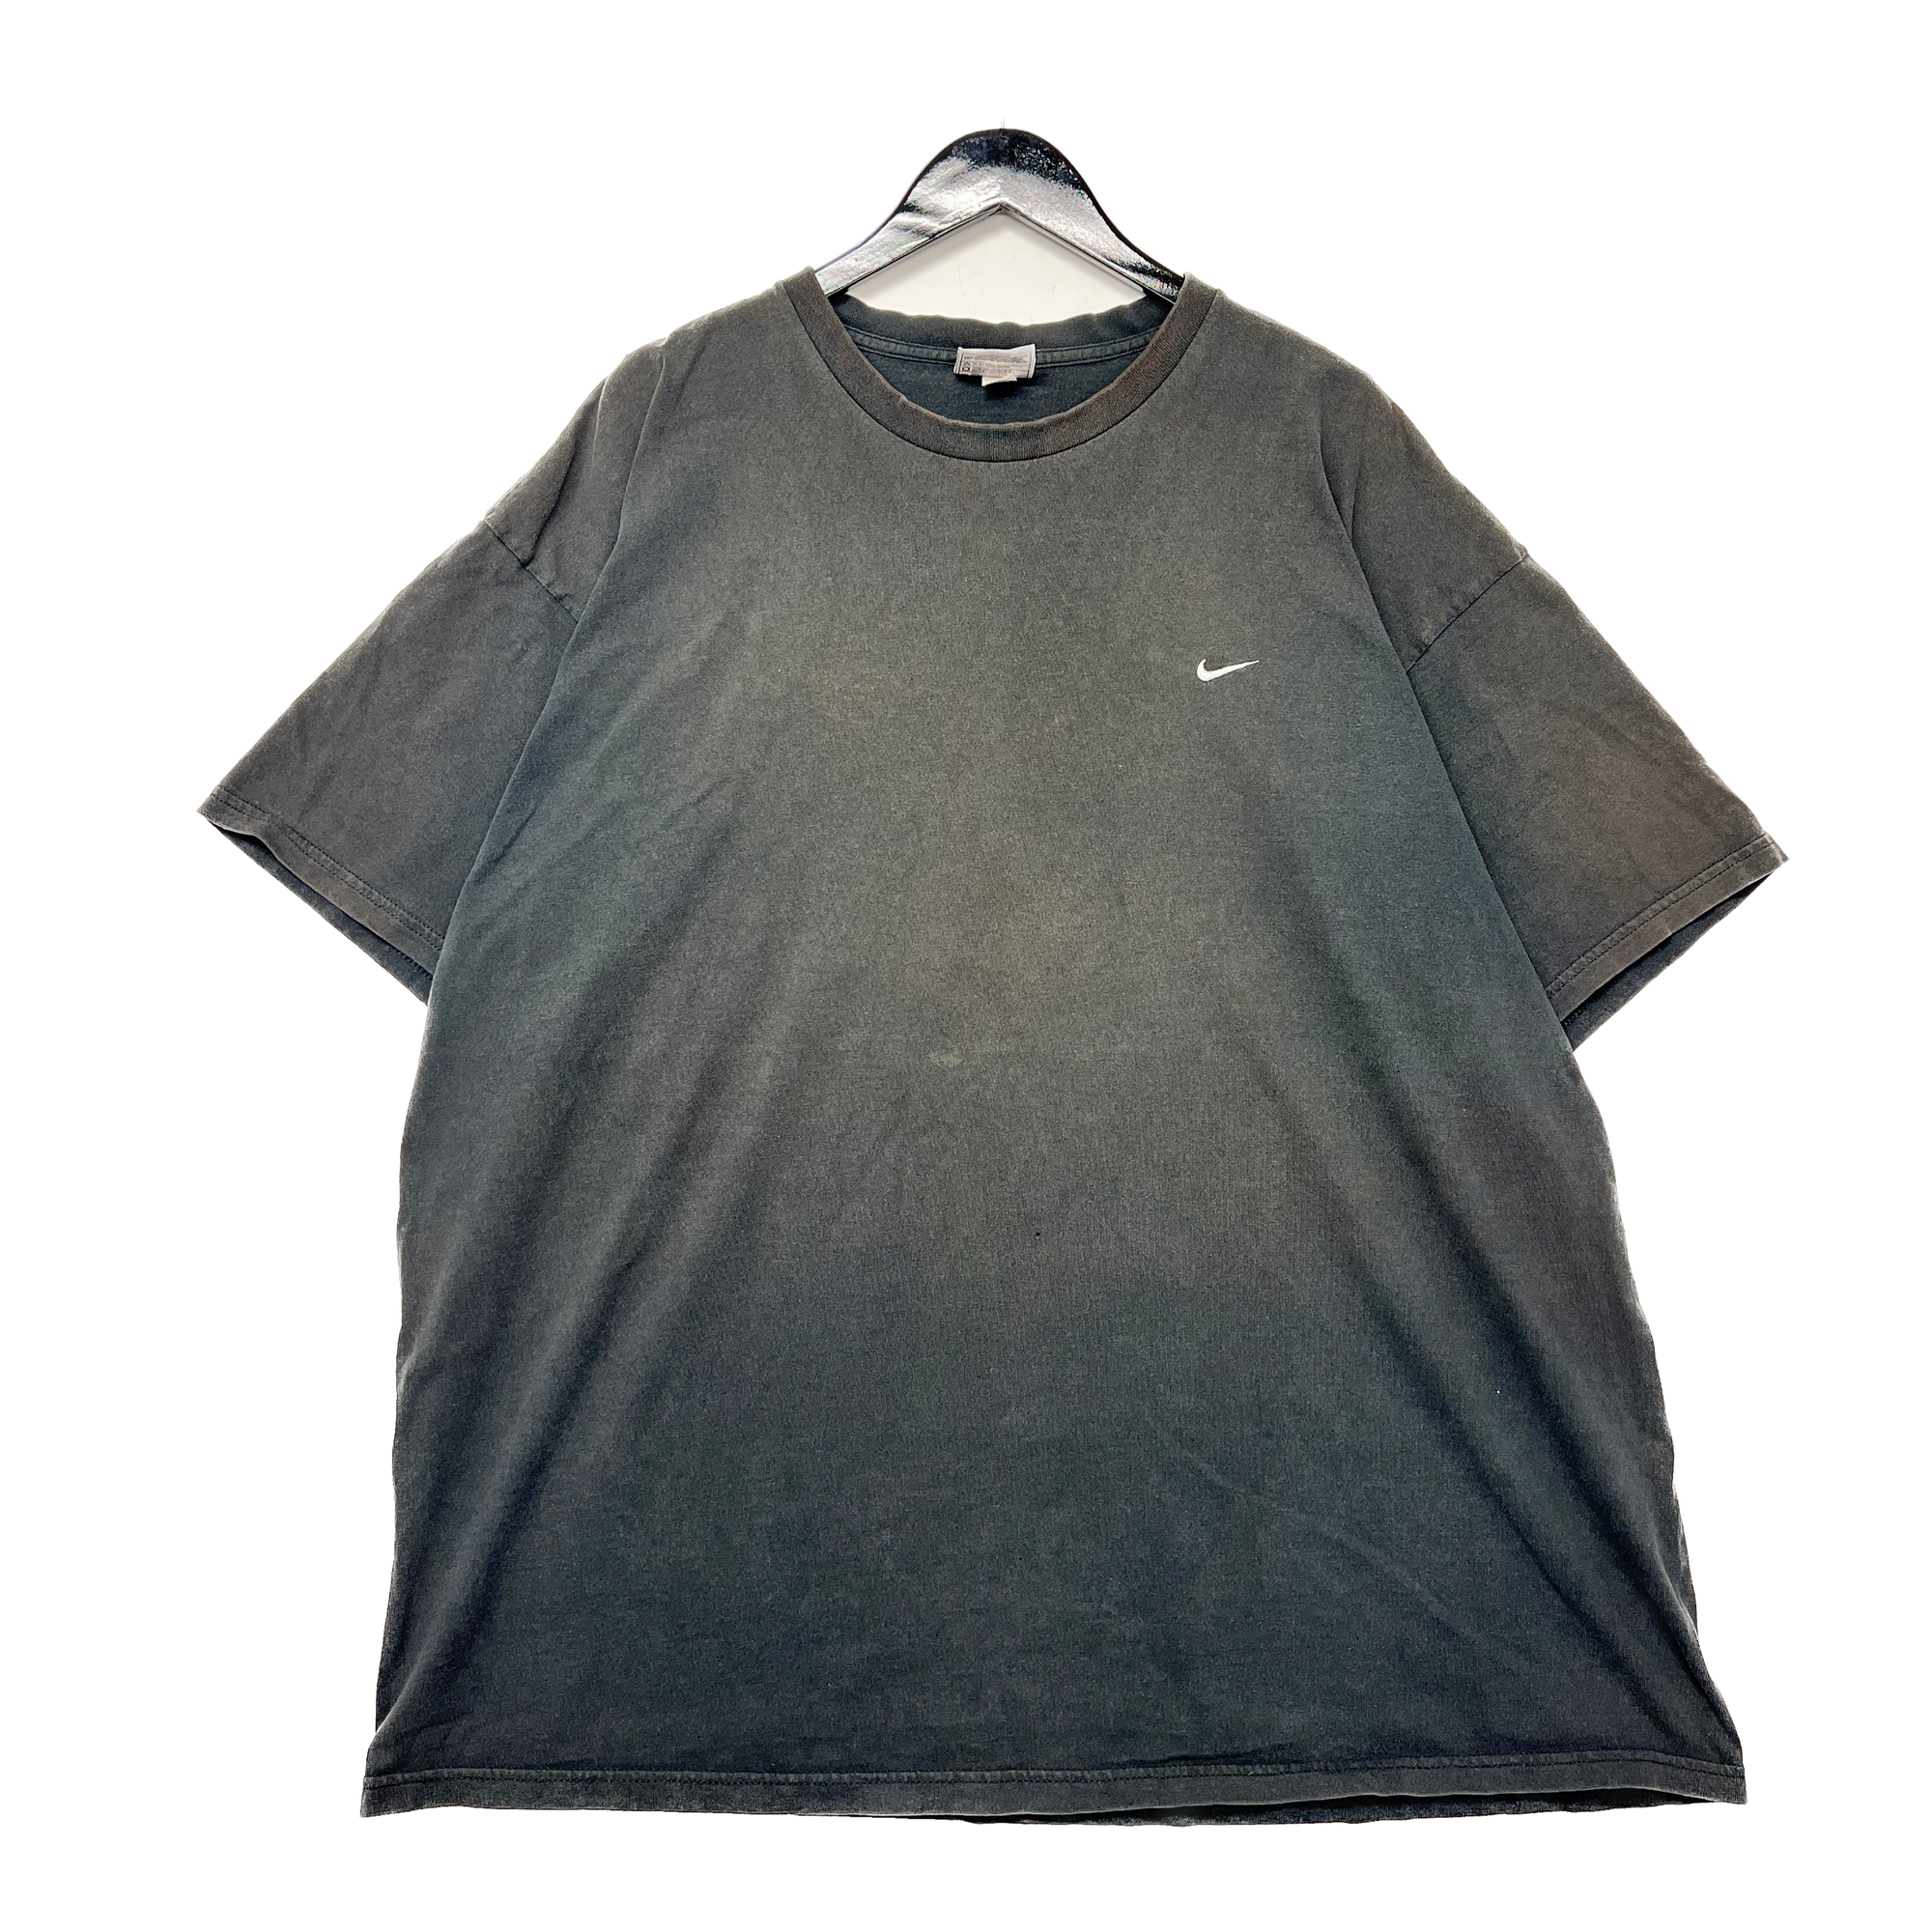 Nike T-shirt Size 2XL